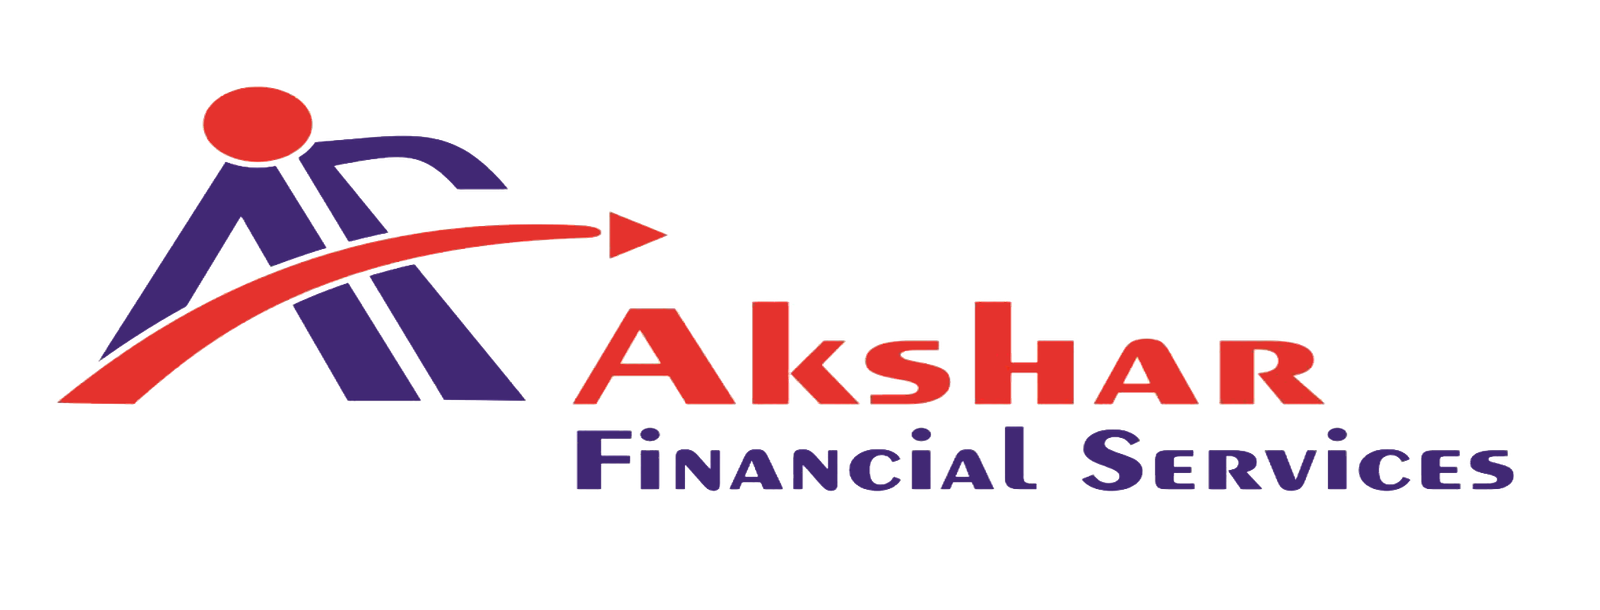 Akshar Financial Services